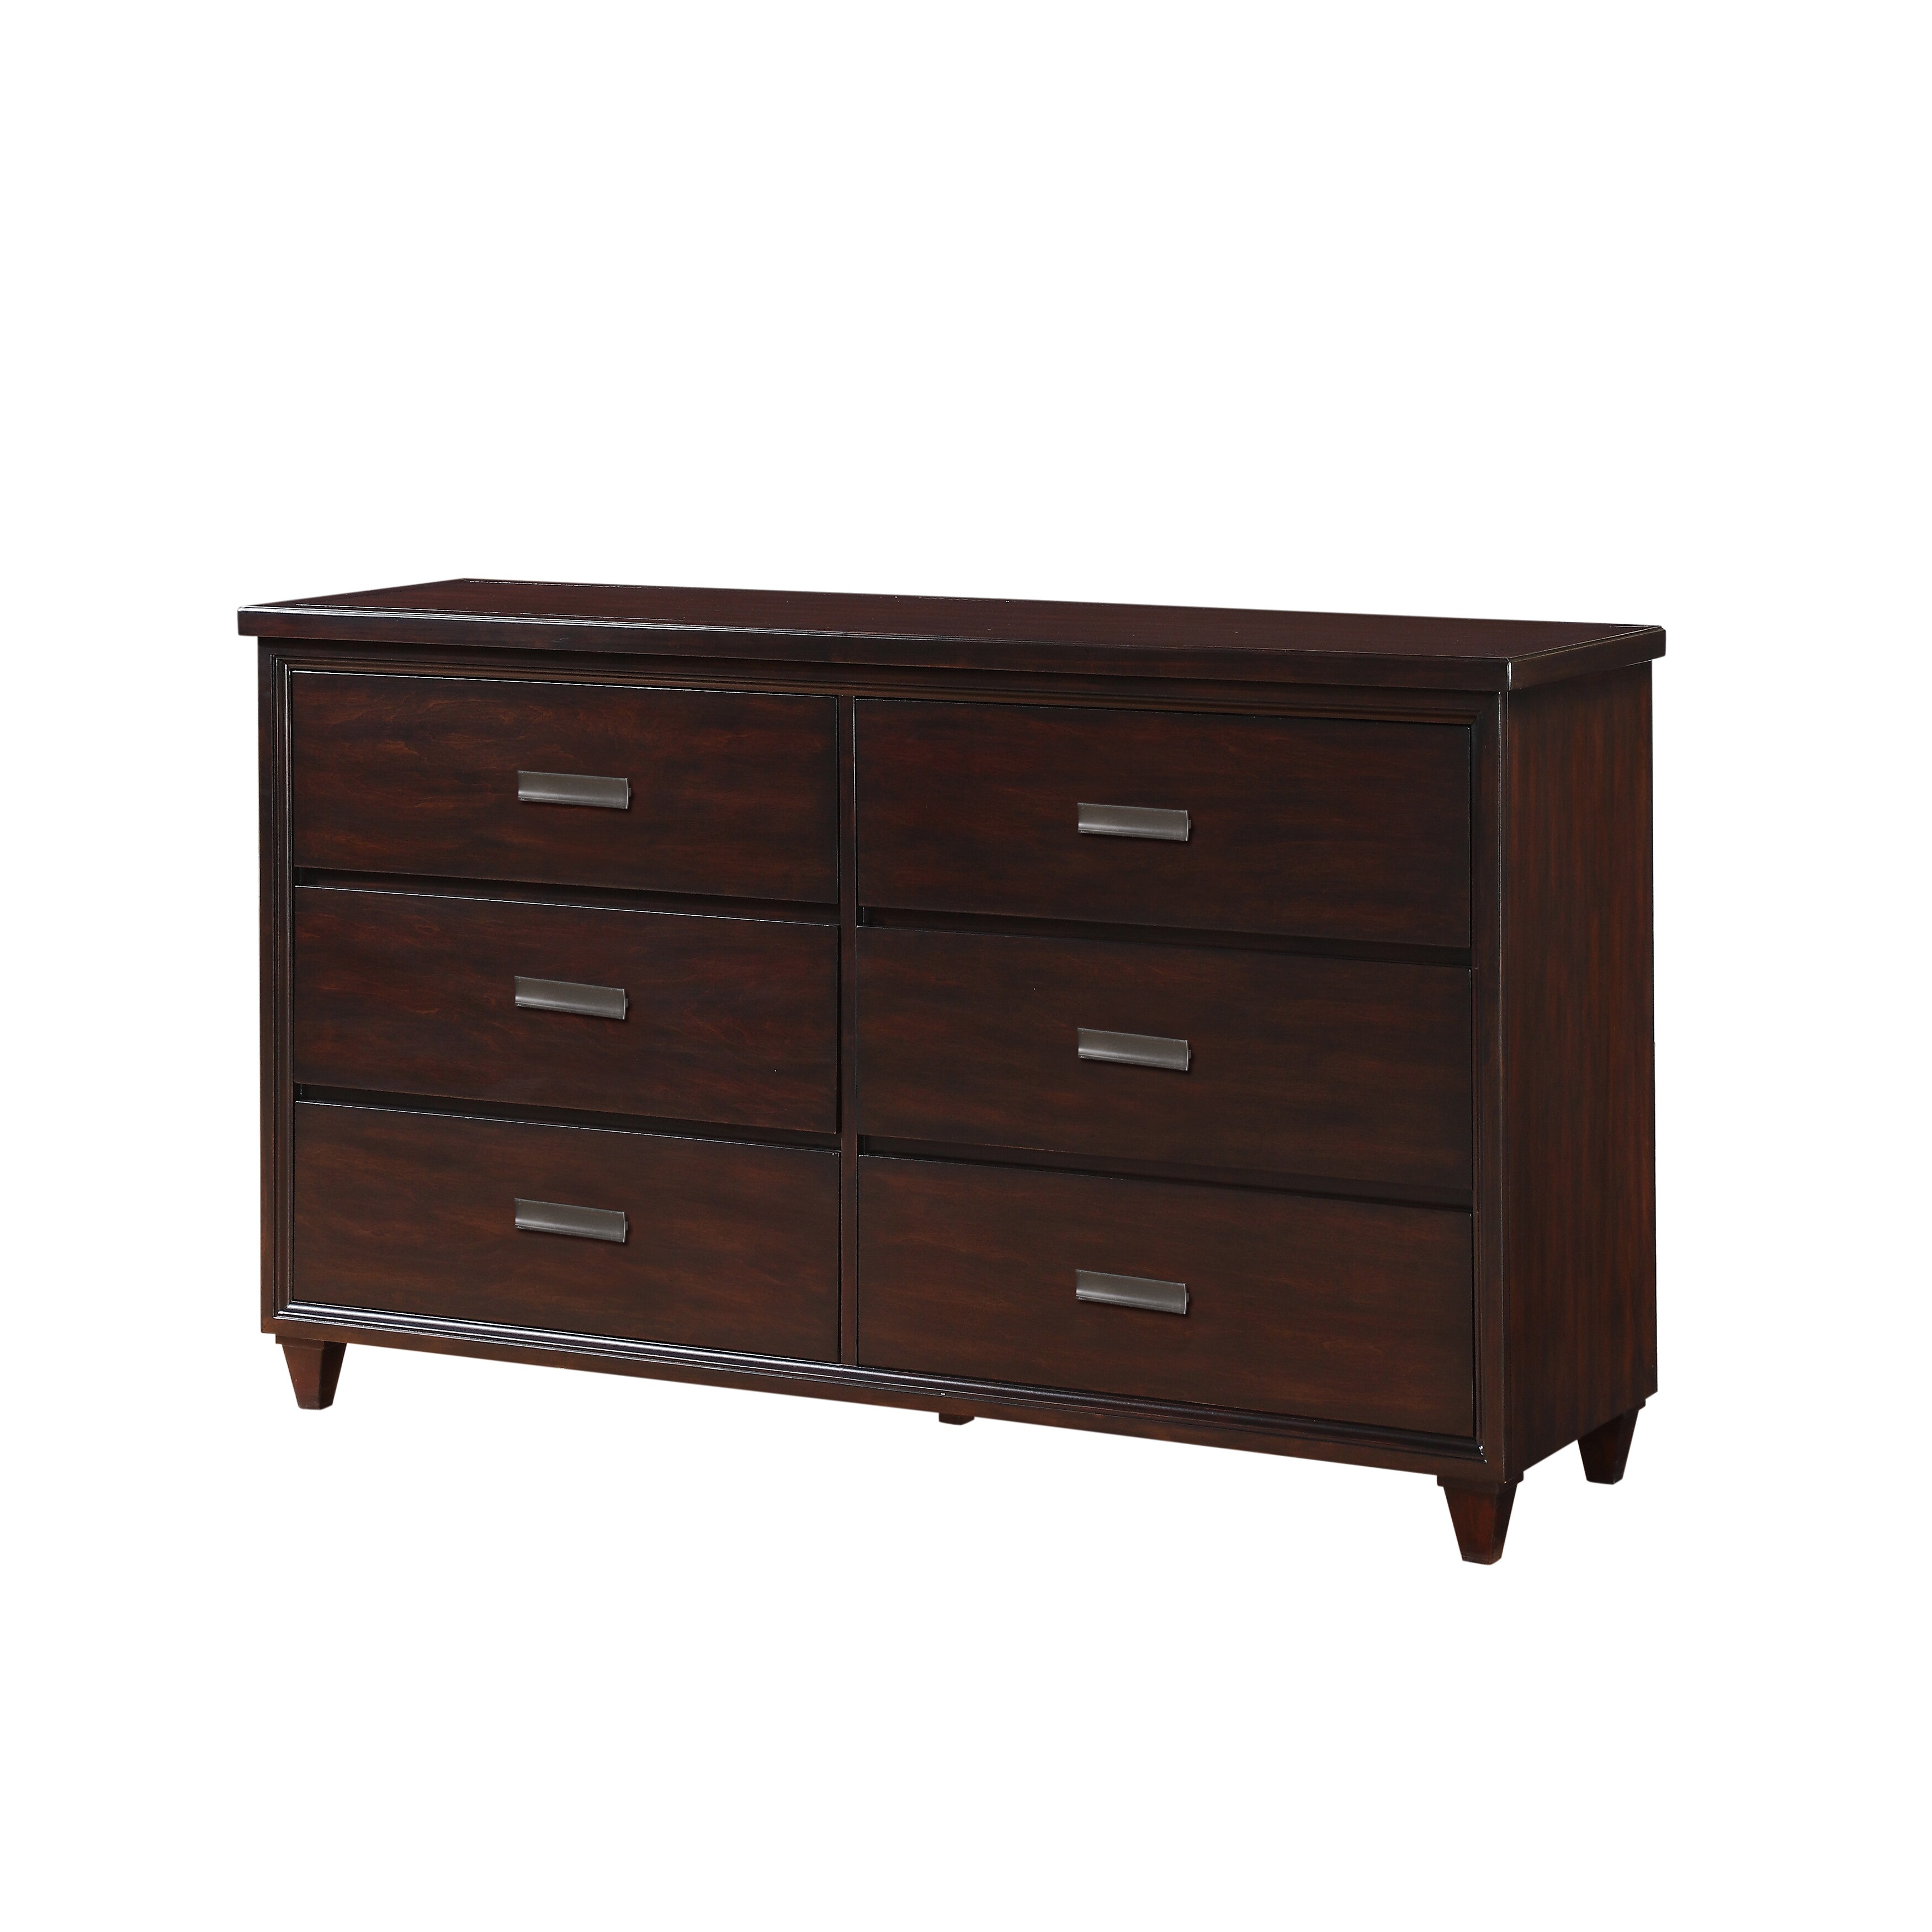 Acme Furniture Raleigh Cherry 6 Drawer Dresser Overstock 13218725